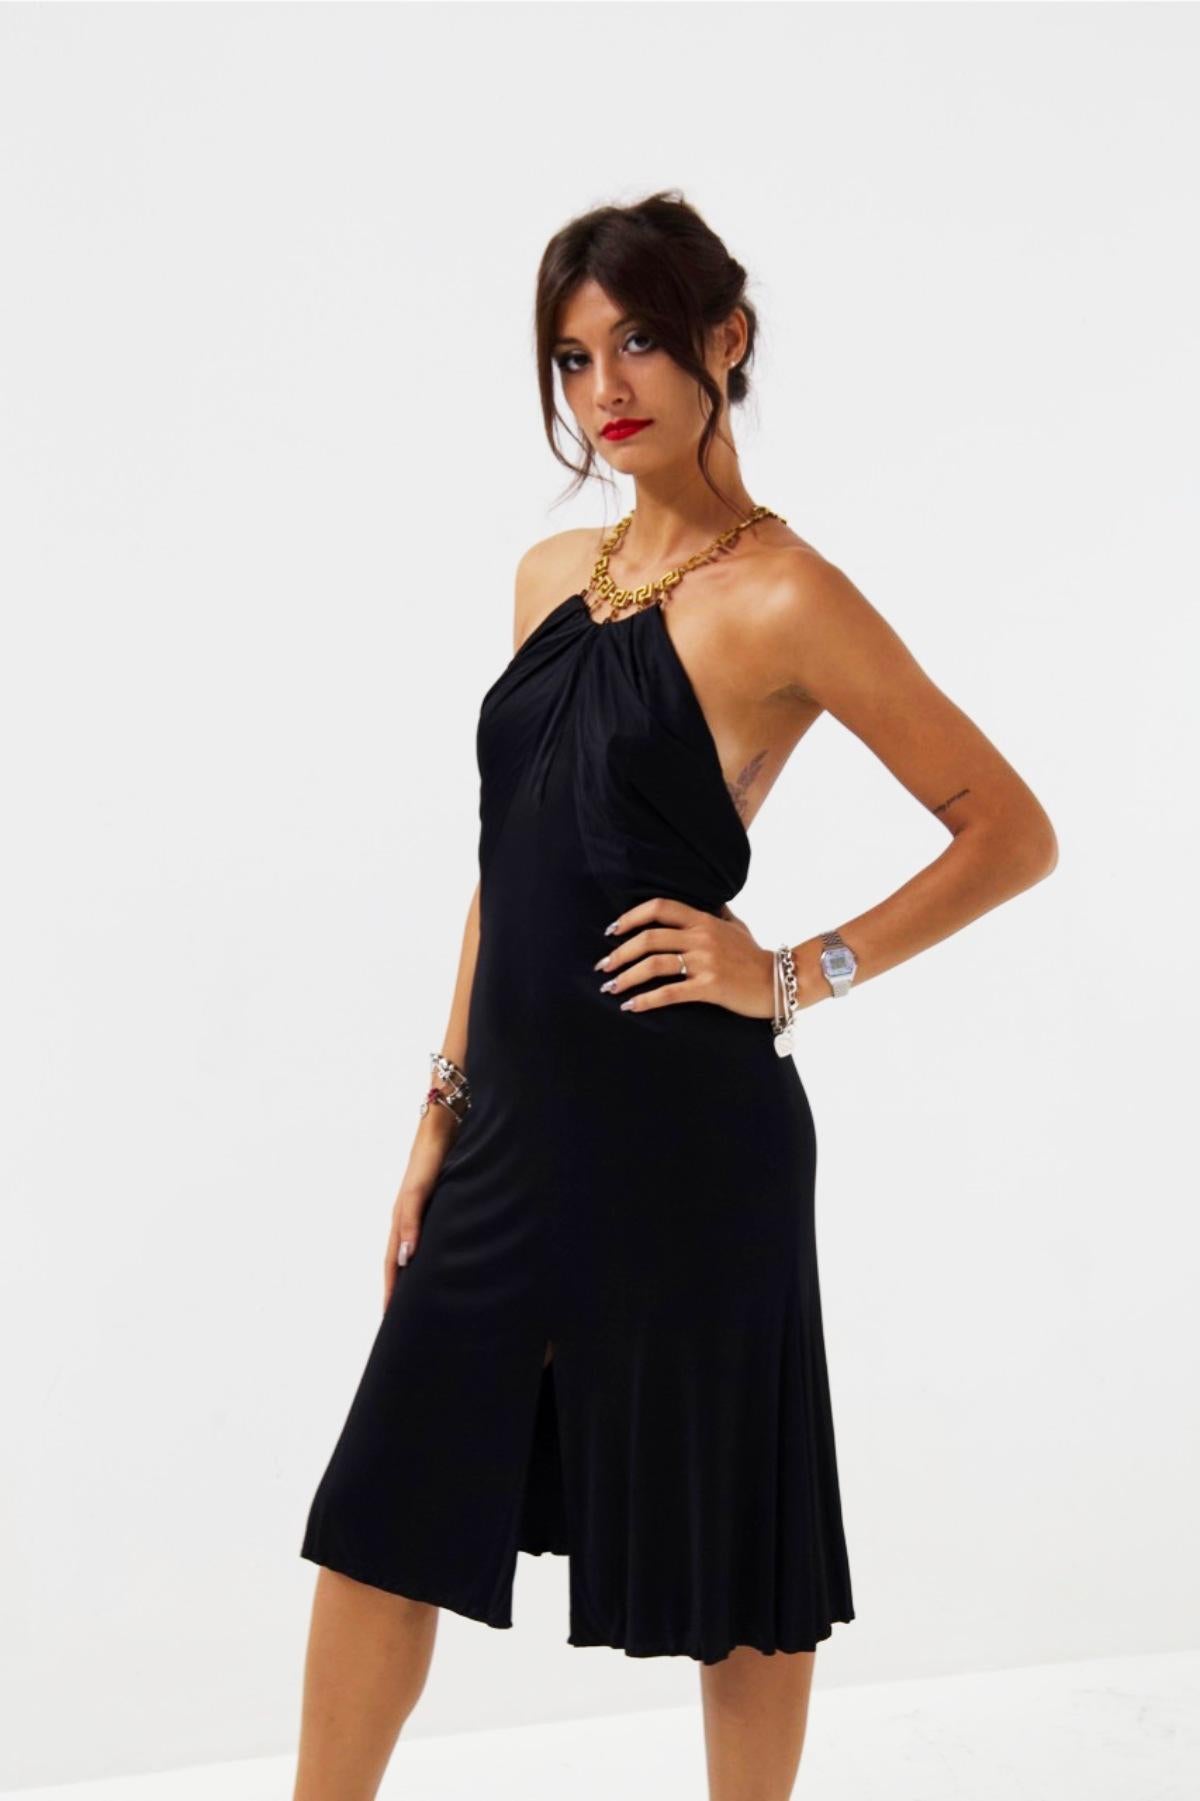 Gianni Versace Black Medusa Evening Dress For Sale 7